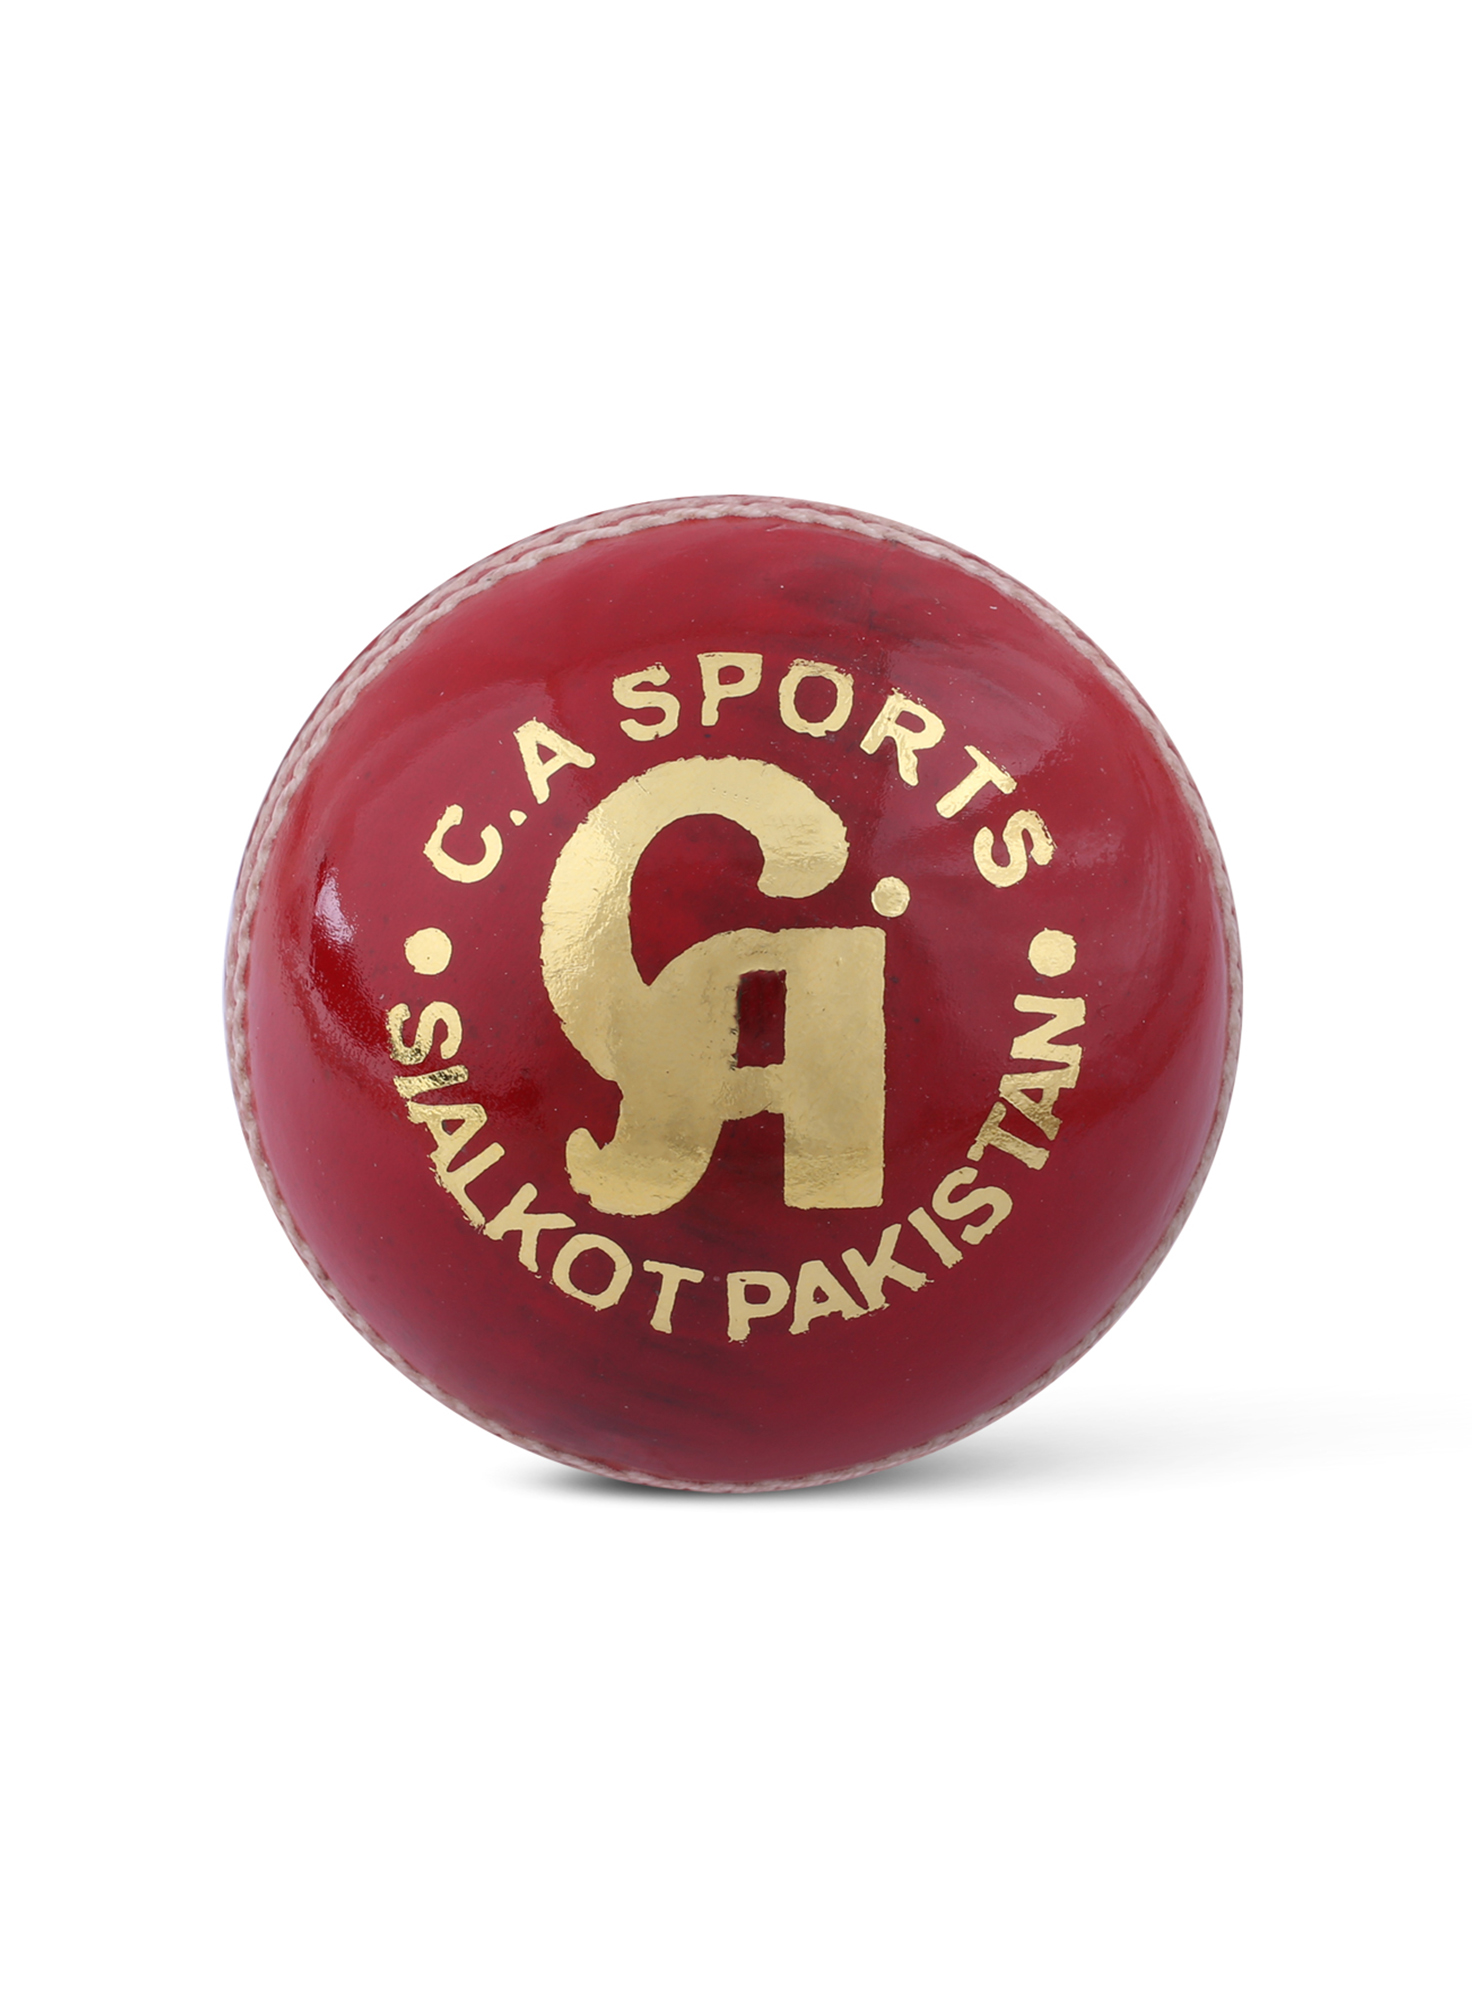 Cricket balls